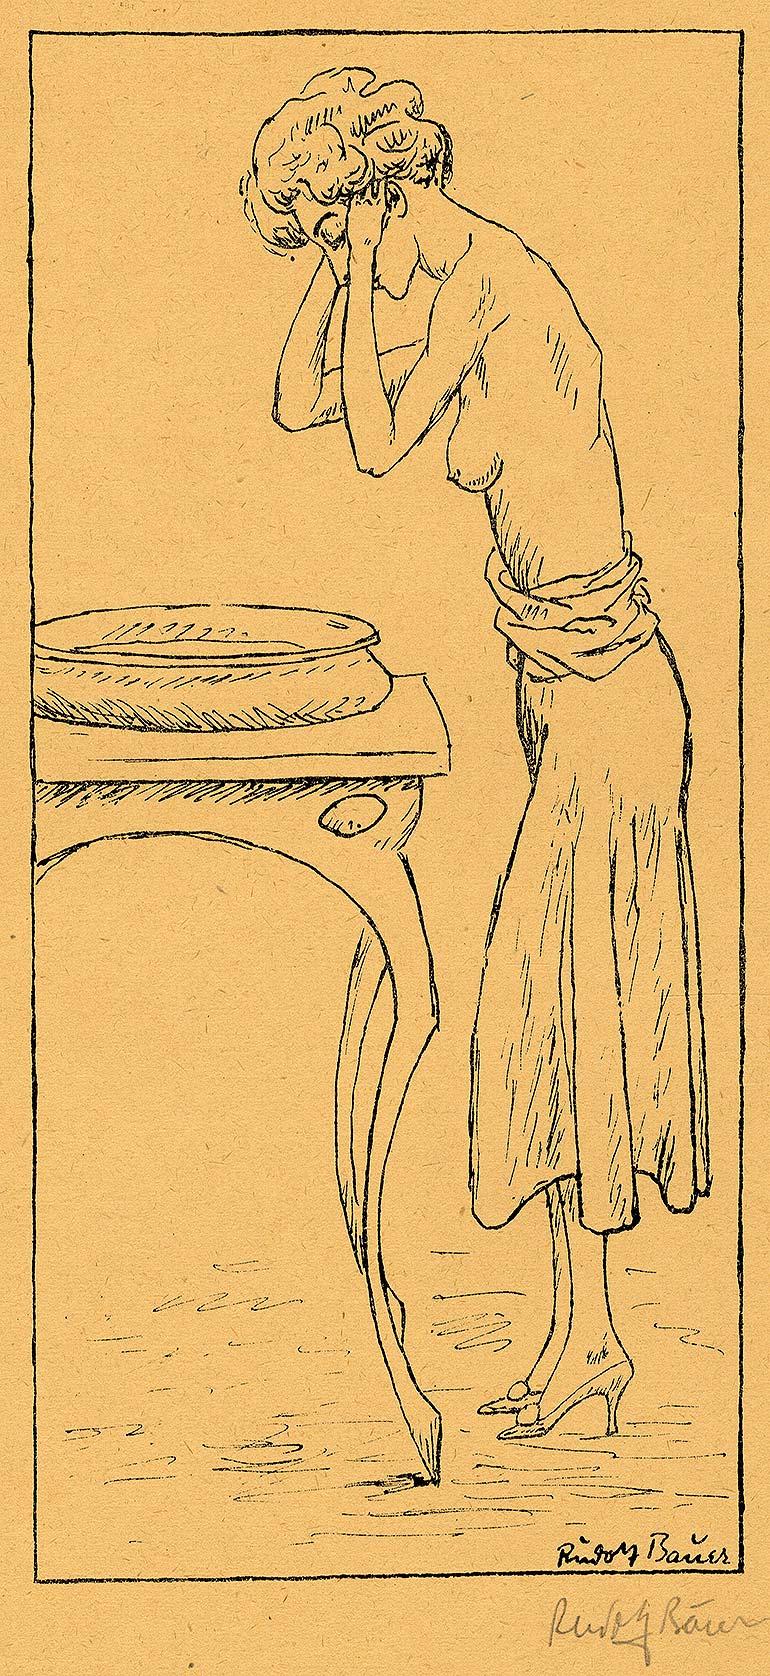 Woman at Basin (a young woman freshens up at a basin) - Modern Print by Rudolf Bauer